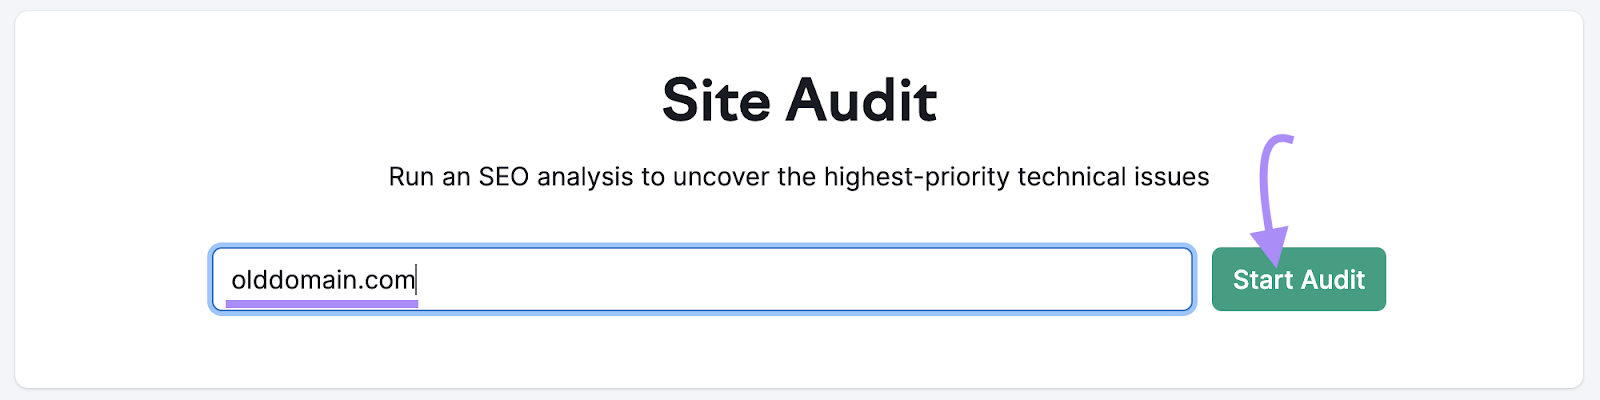 "olddomain.com" entered into Site Audit search bar